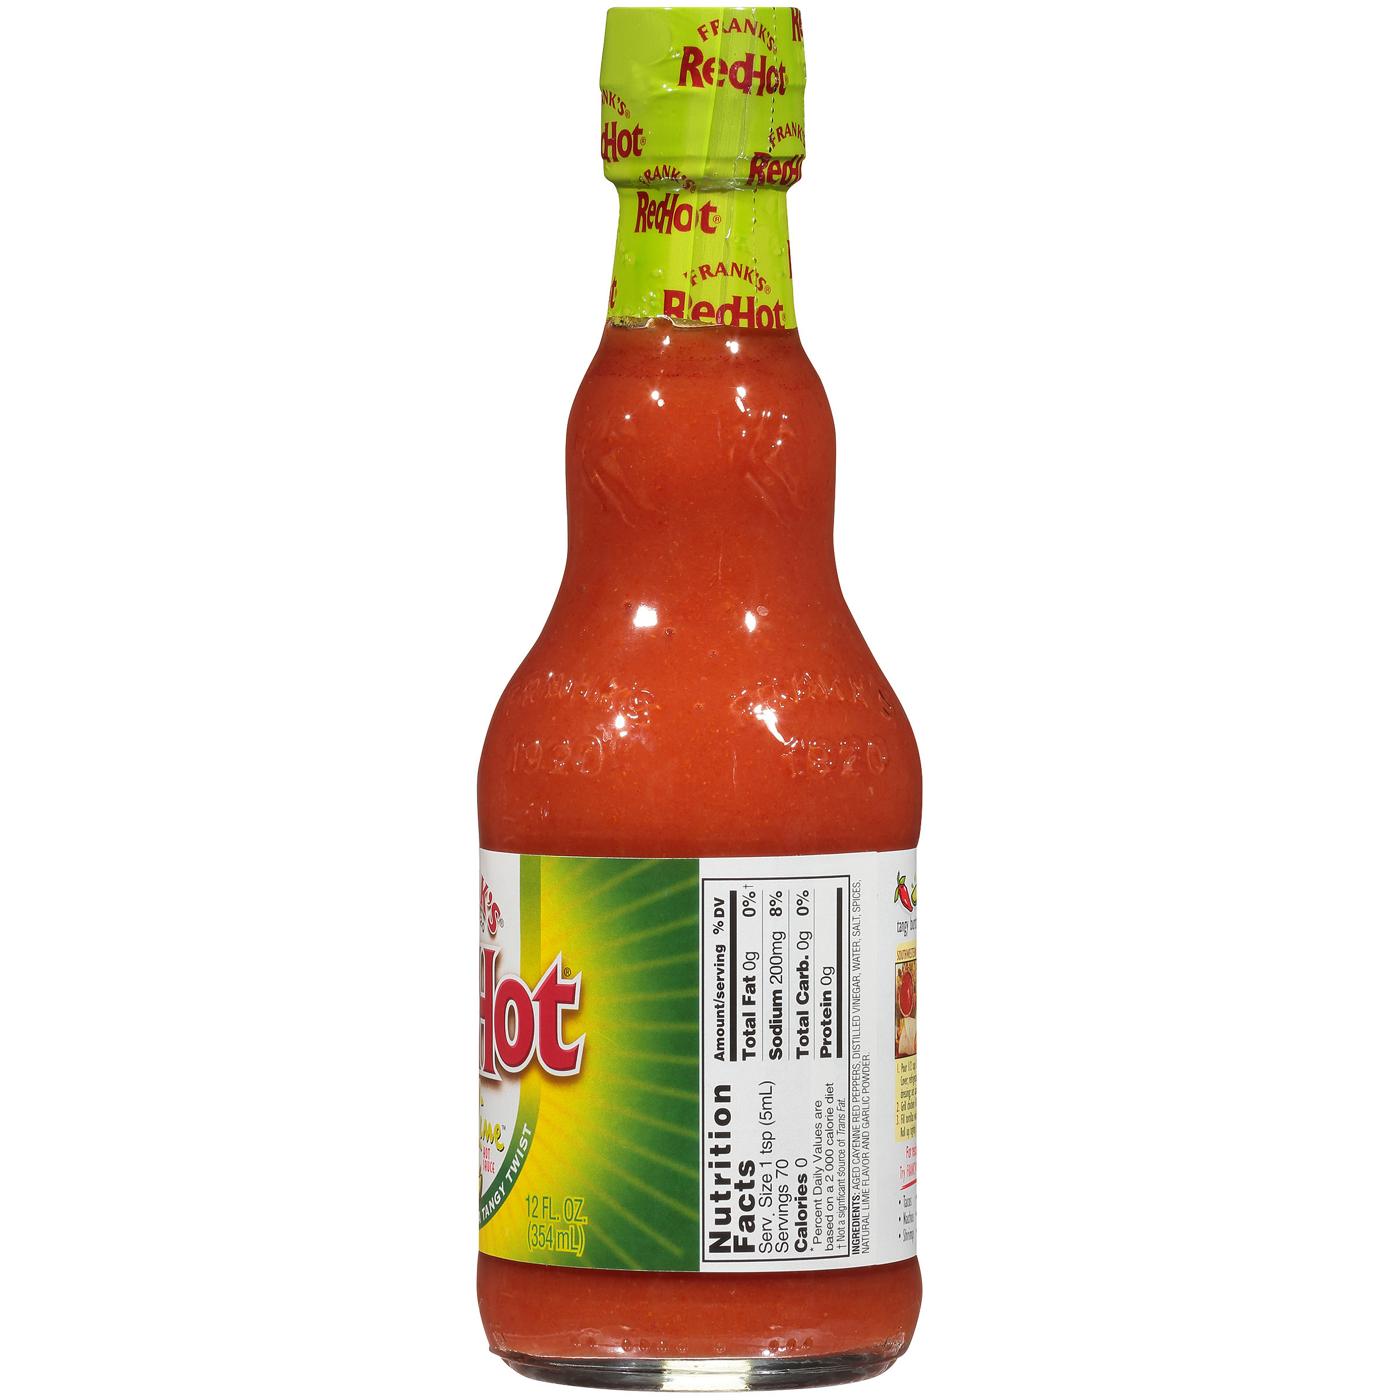 Frank's RedHot Chili 'n Lime Sauce; image 6 of 9